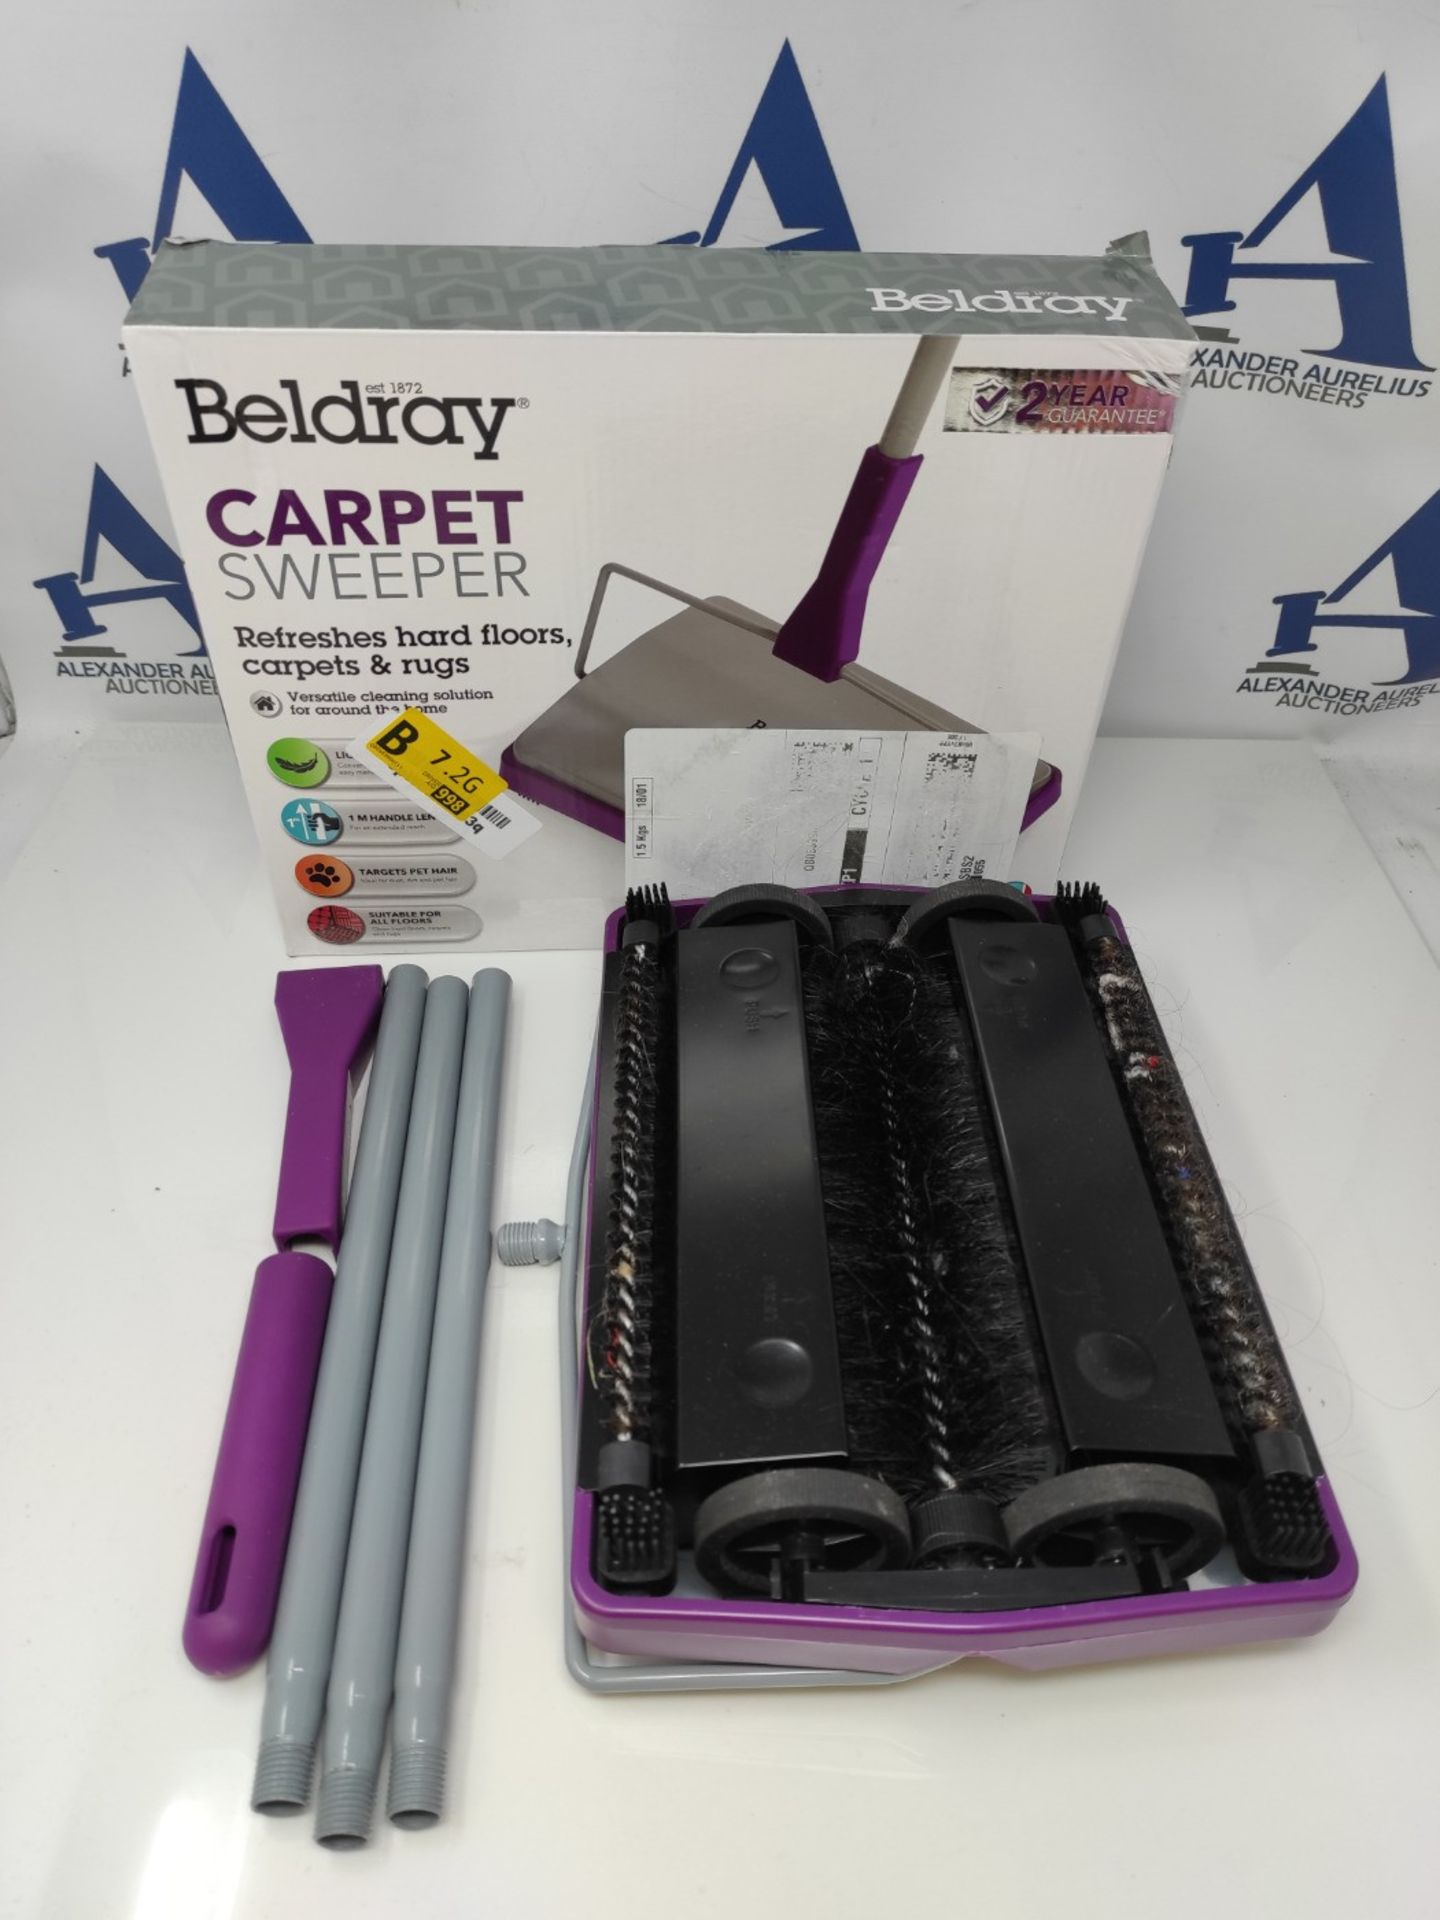 Beldray LA024855PURWK2 Carpet Sweeper - Manual Floor Cleaner, Roller for Carpet Cleani